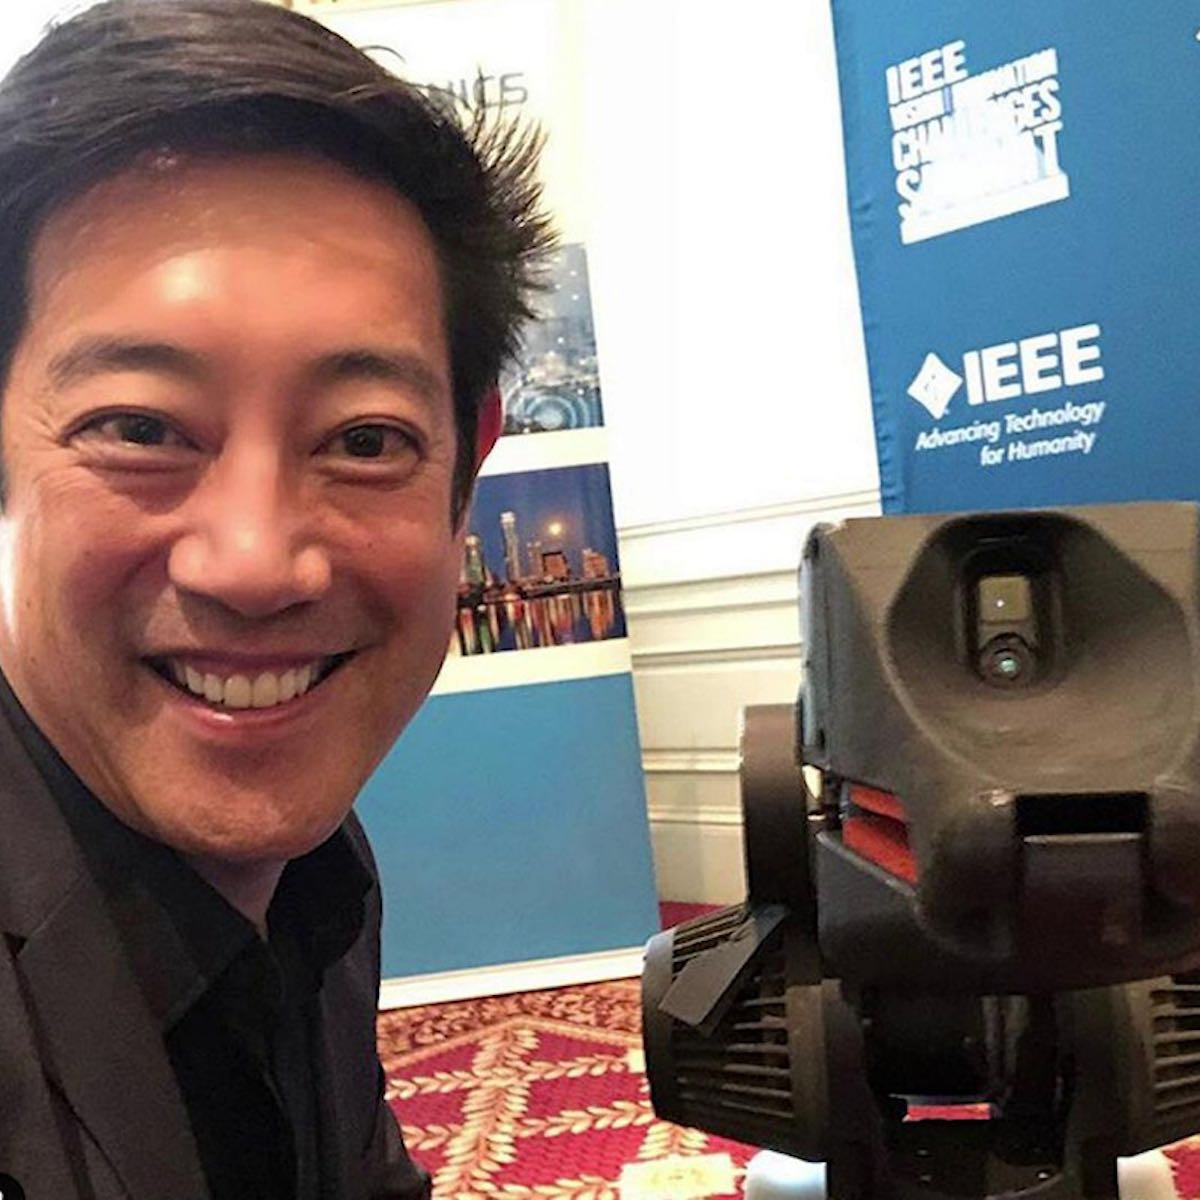 Grant Imahara snaps a selfie with Boston Dynamics' SpotMini robot at IEEE VIC Summit 2018